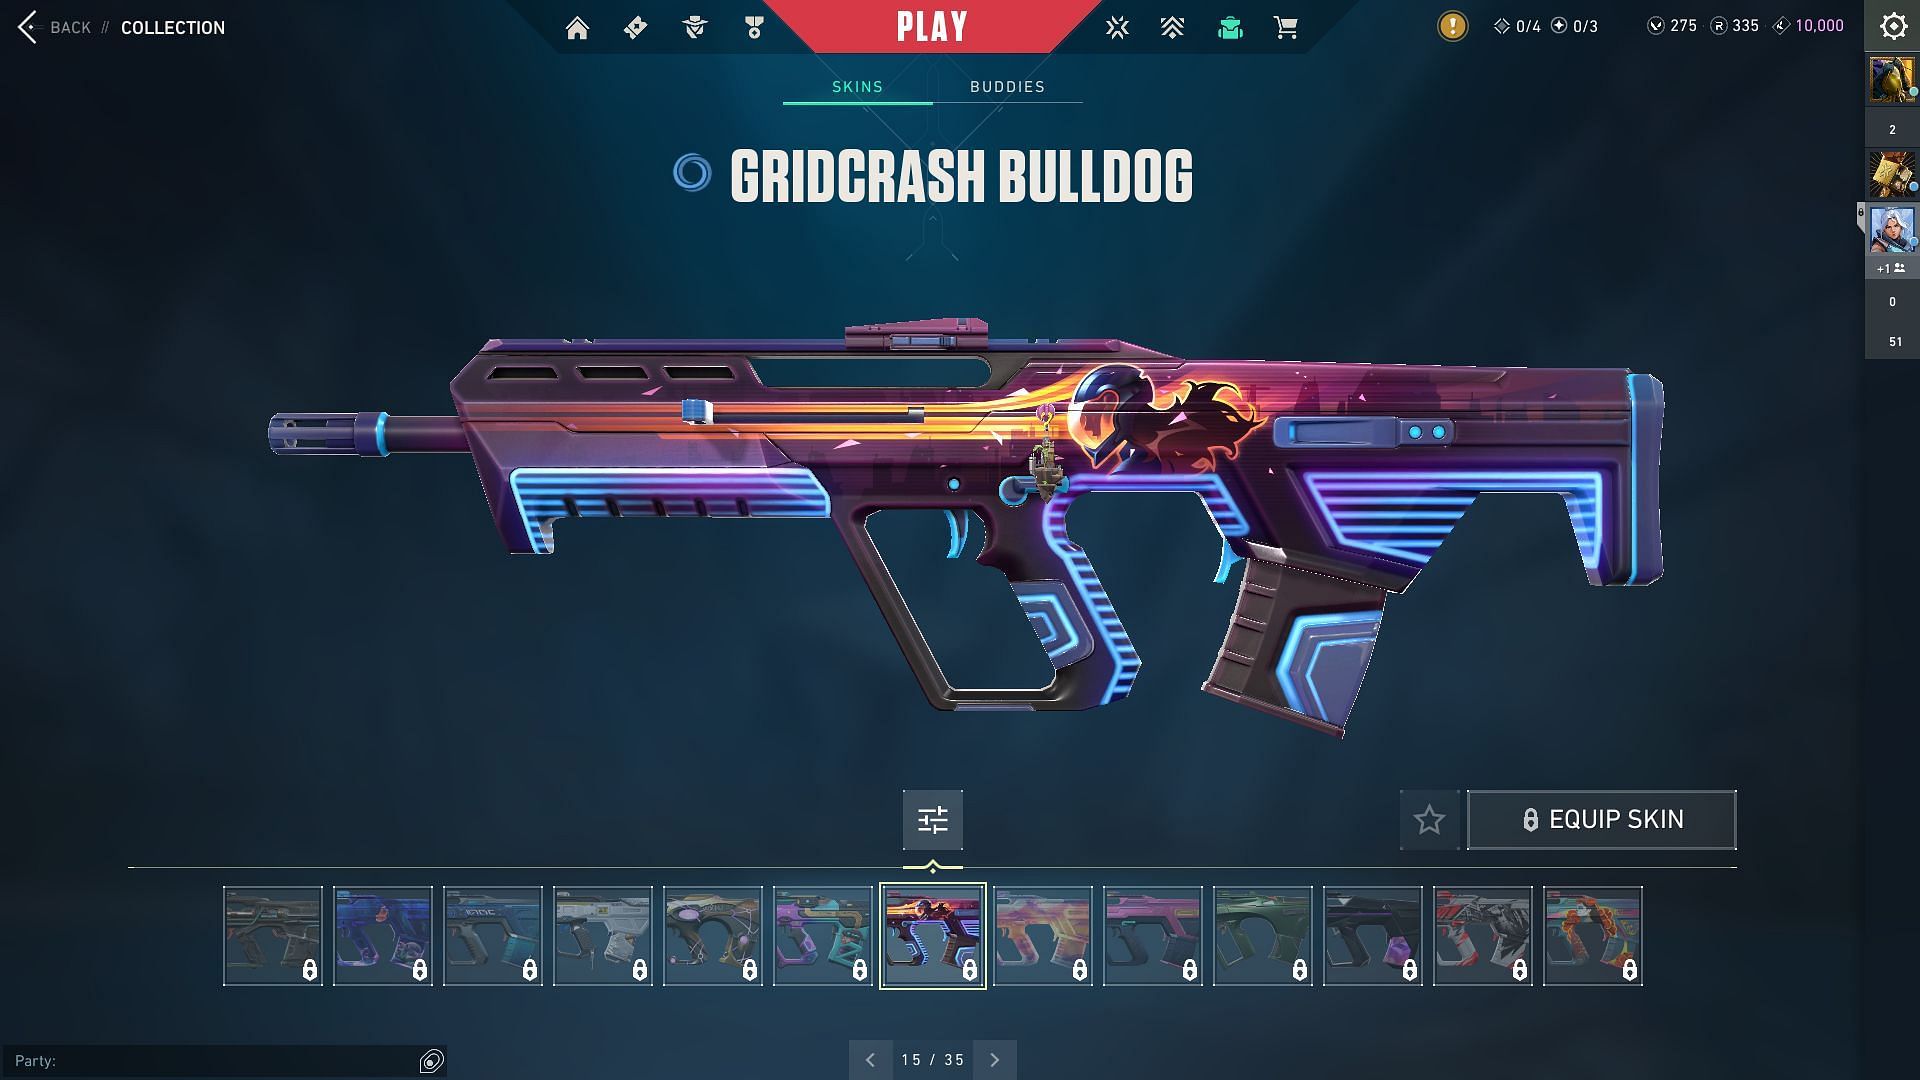 Gridcrash Bulldog (Image via Sportskeeda and Riot Games)